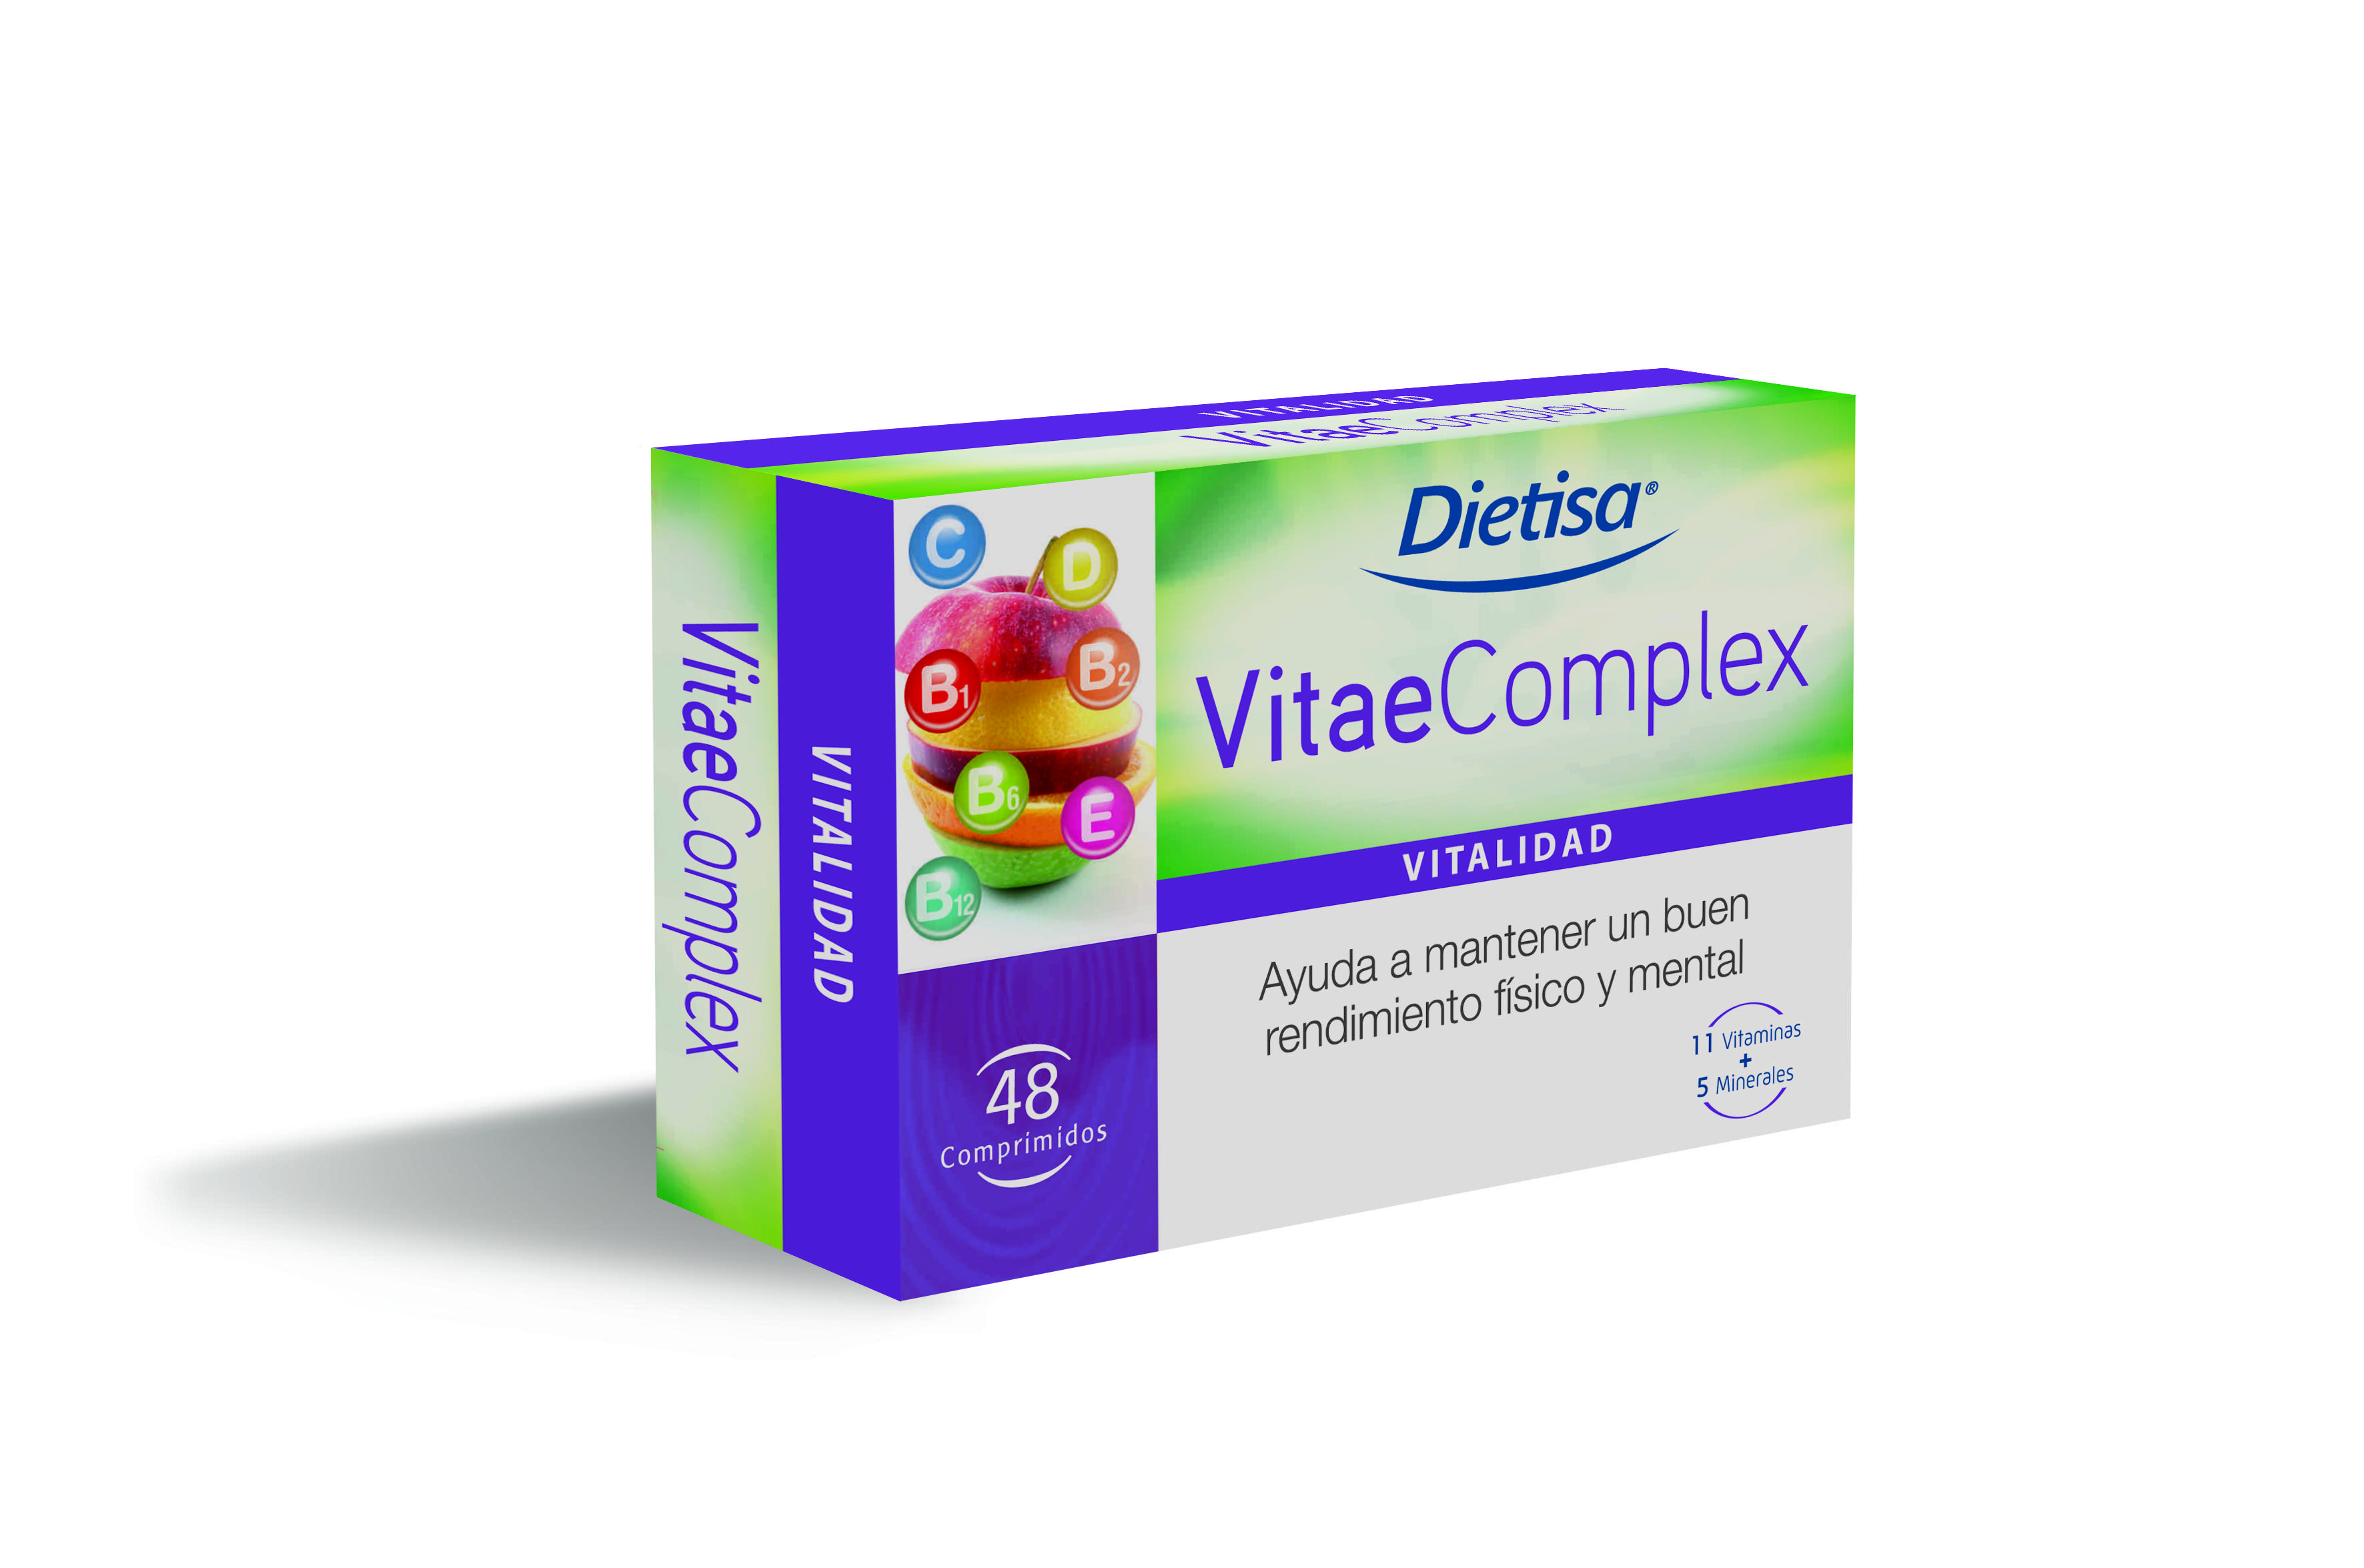 Foto Vitae Complex Dietisa 48 comprimidos foto 70923